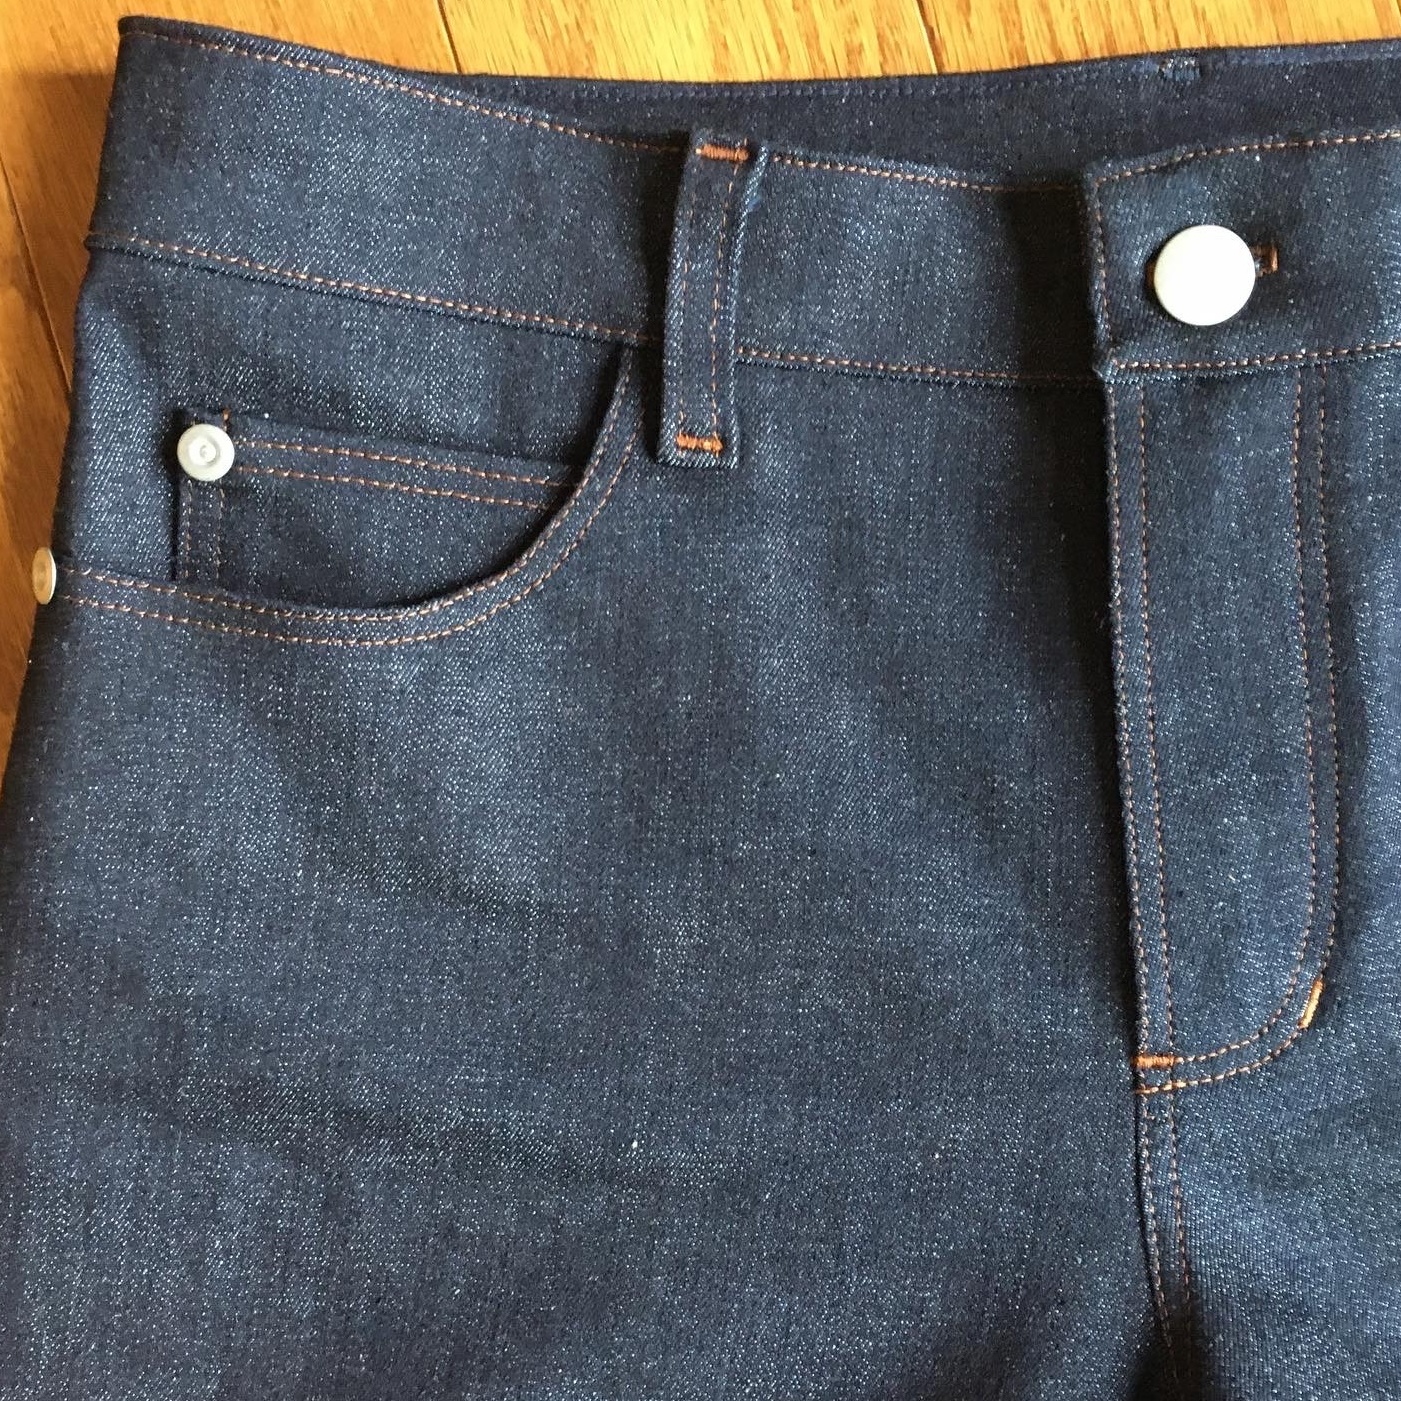 Lindsay Janeane – A sewing and DIY blog